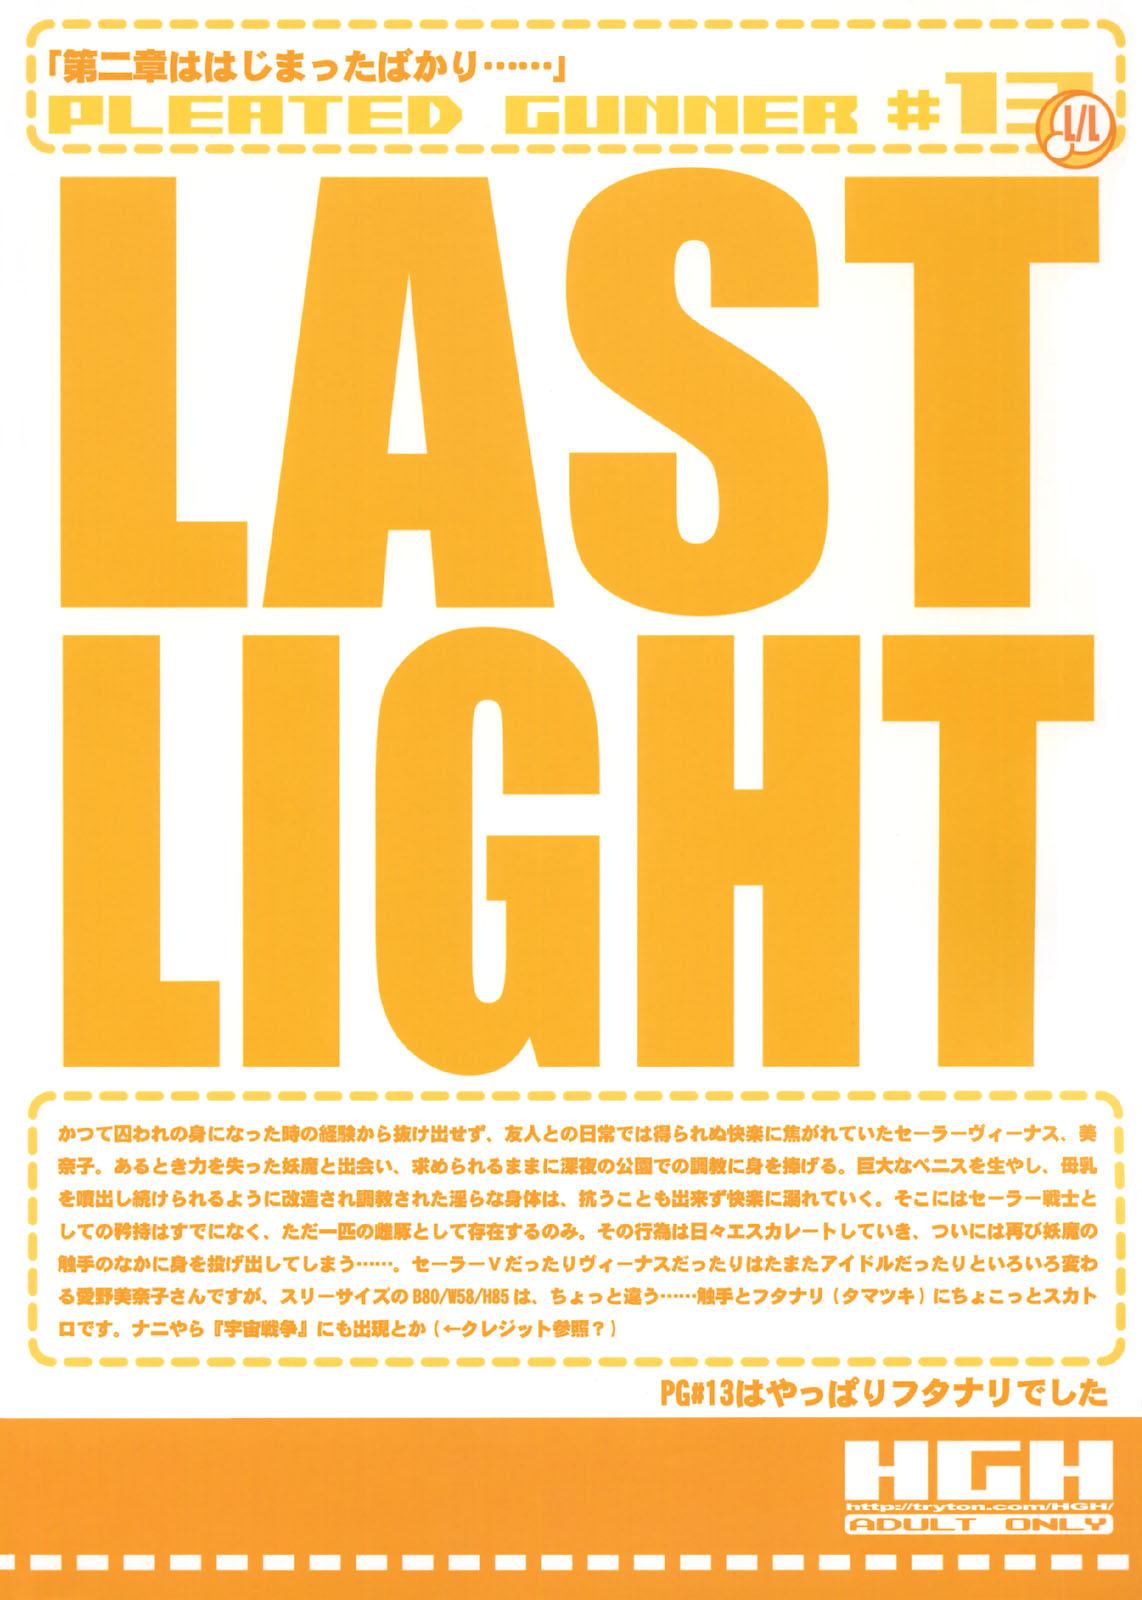 HGH - Last Light 1